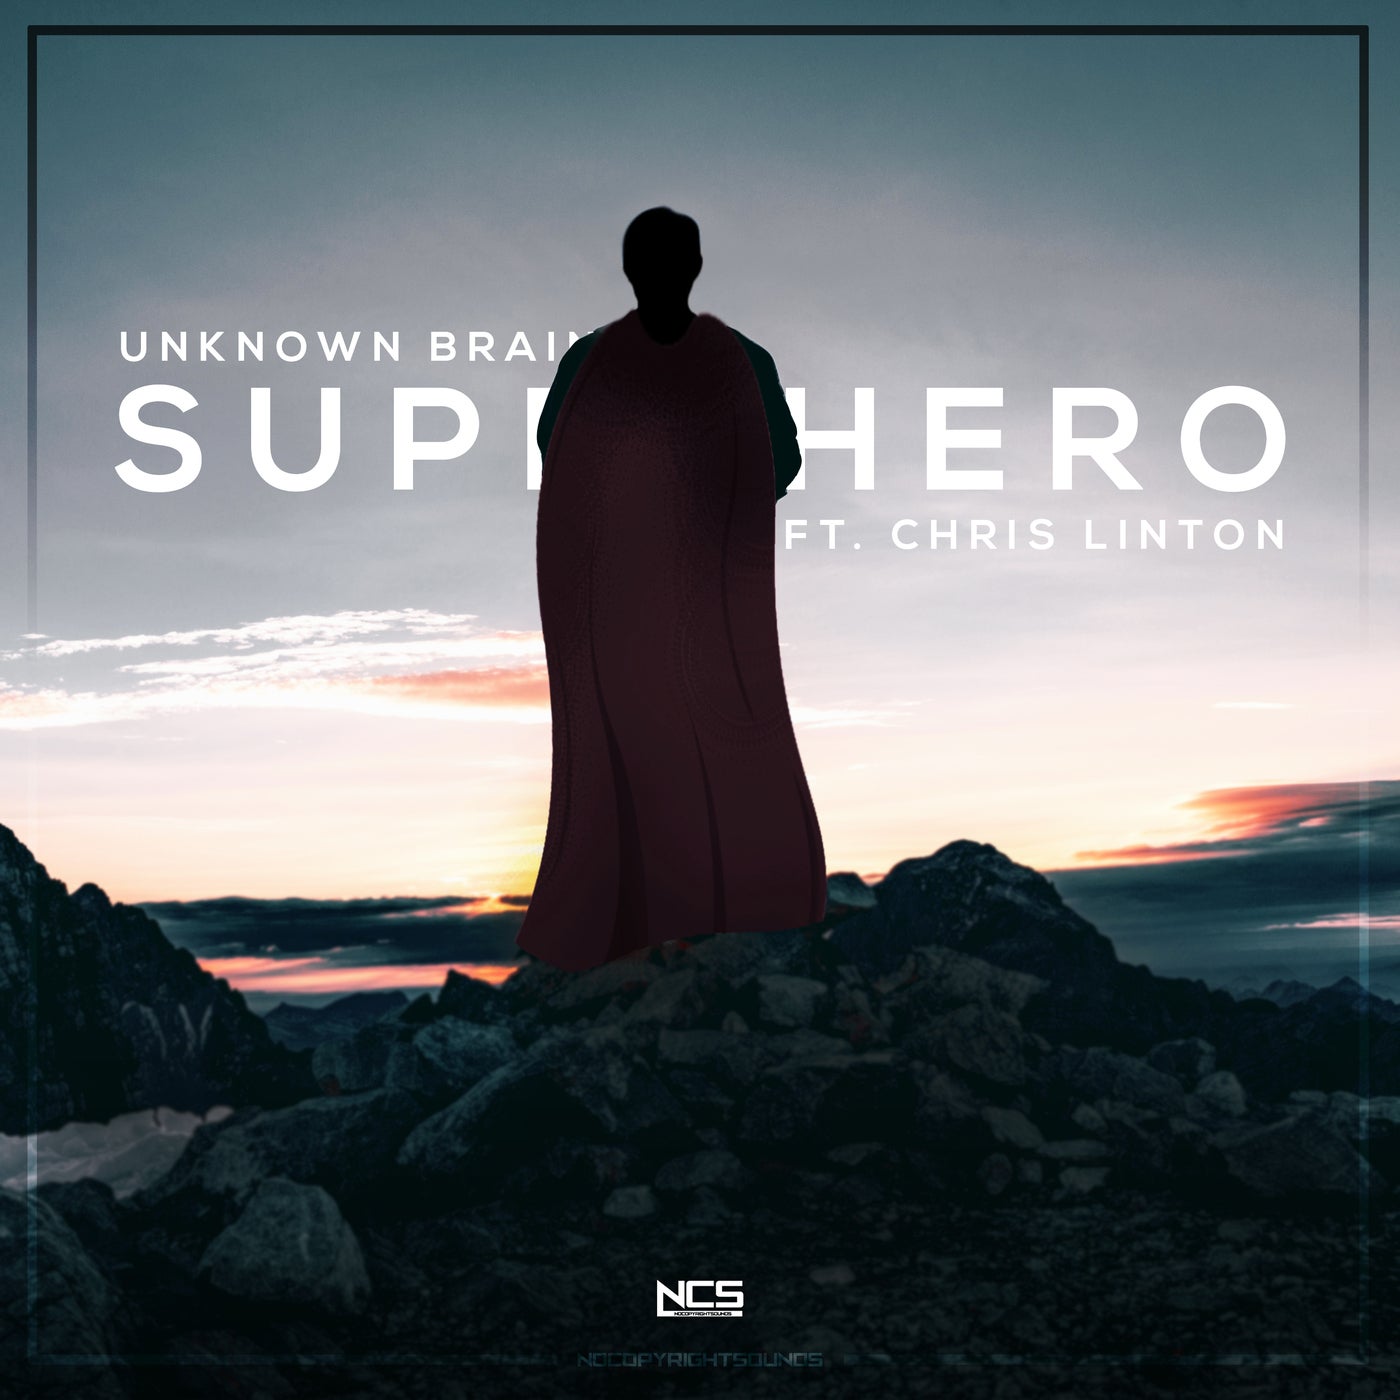 Unknown brain feat. Chris Linton Superhero. Superhero Unknown Brain feat. Chris Linton. Superhero Unknown Brain. Feat. Chris Linton.